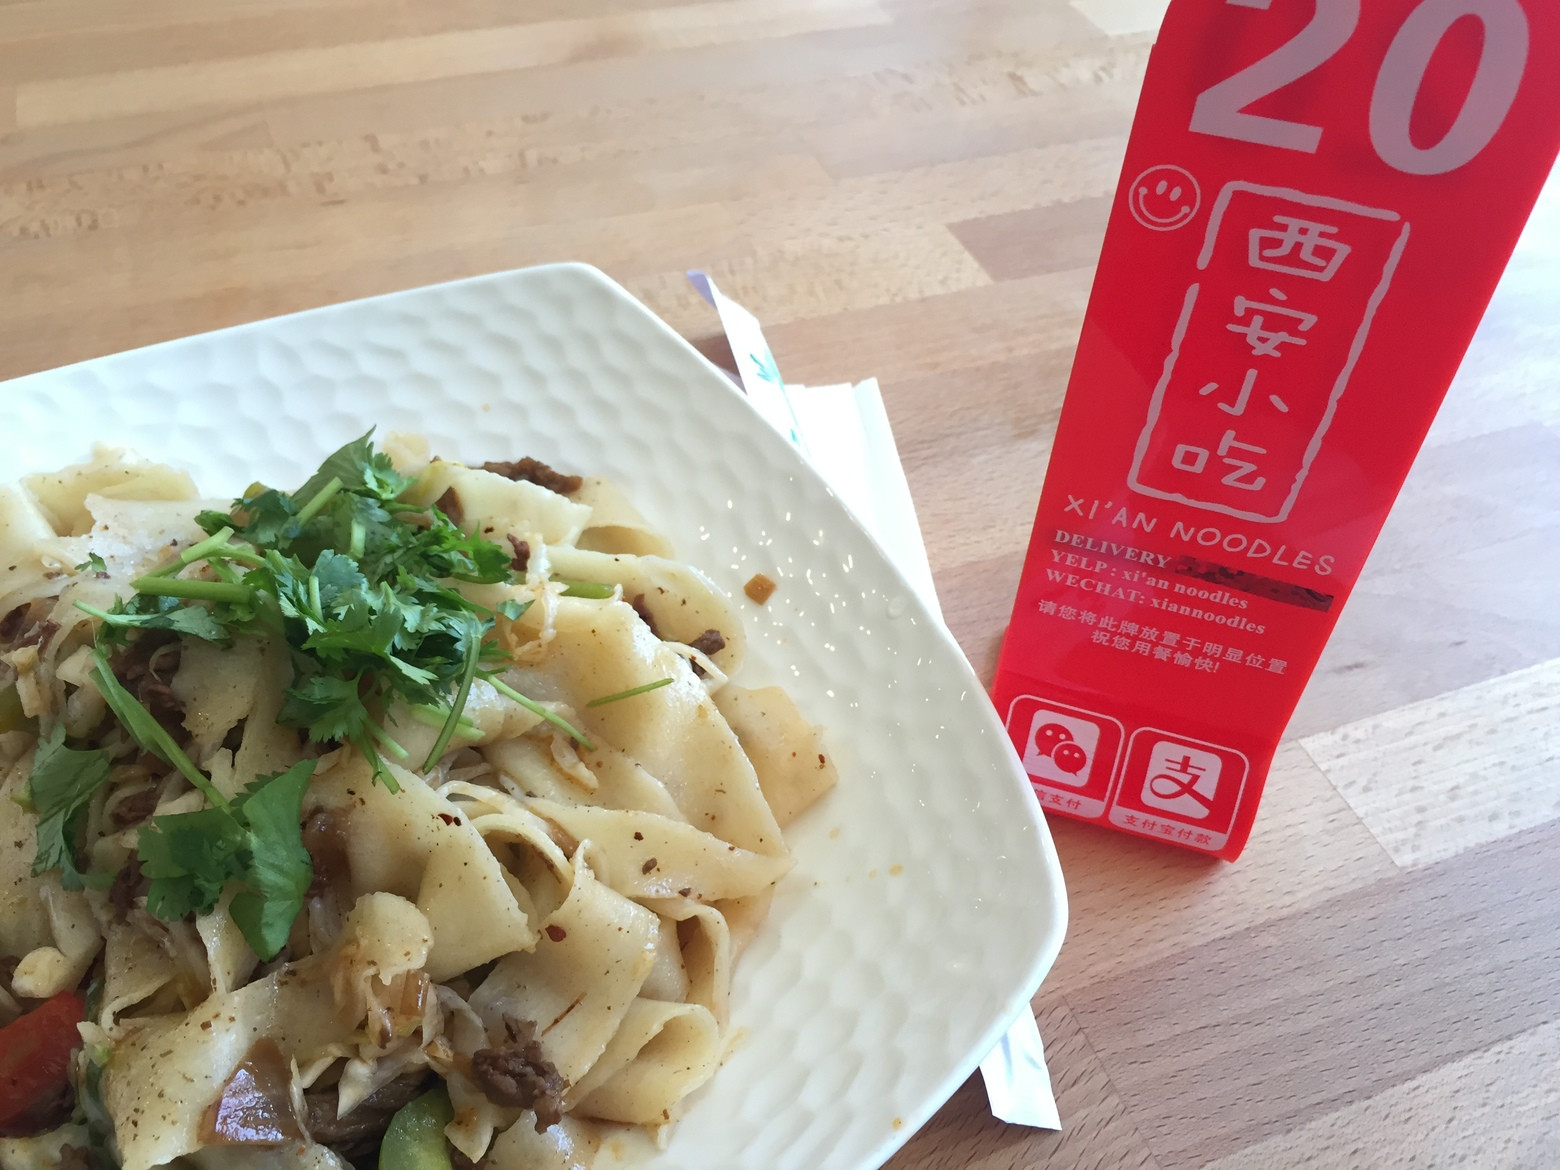 Xian Noodles Menu Inspirational Xi’an Noodles some Of the Very Best